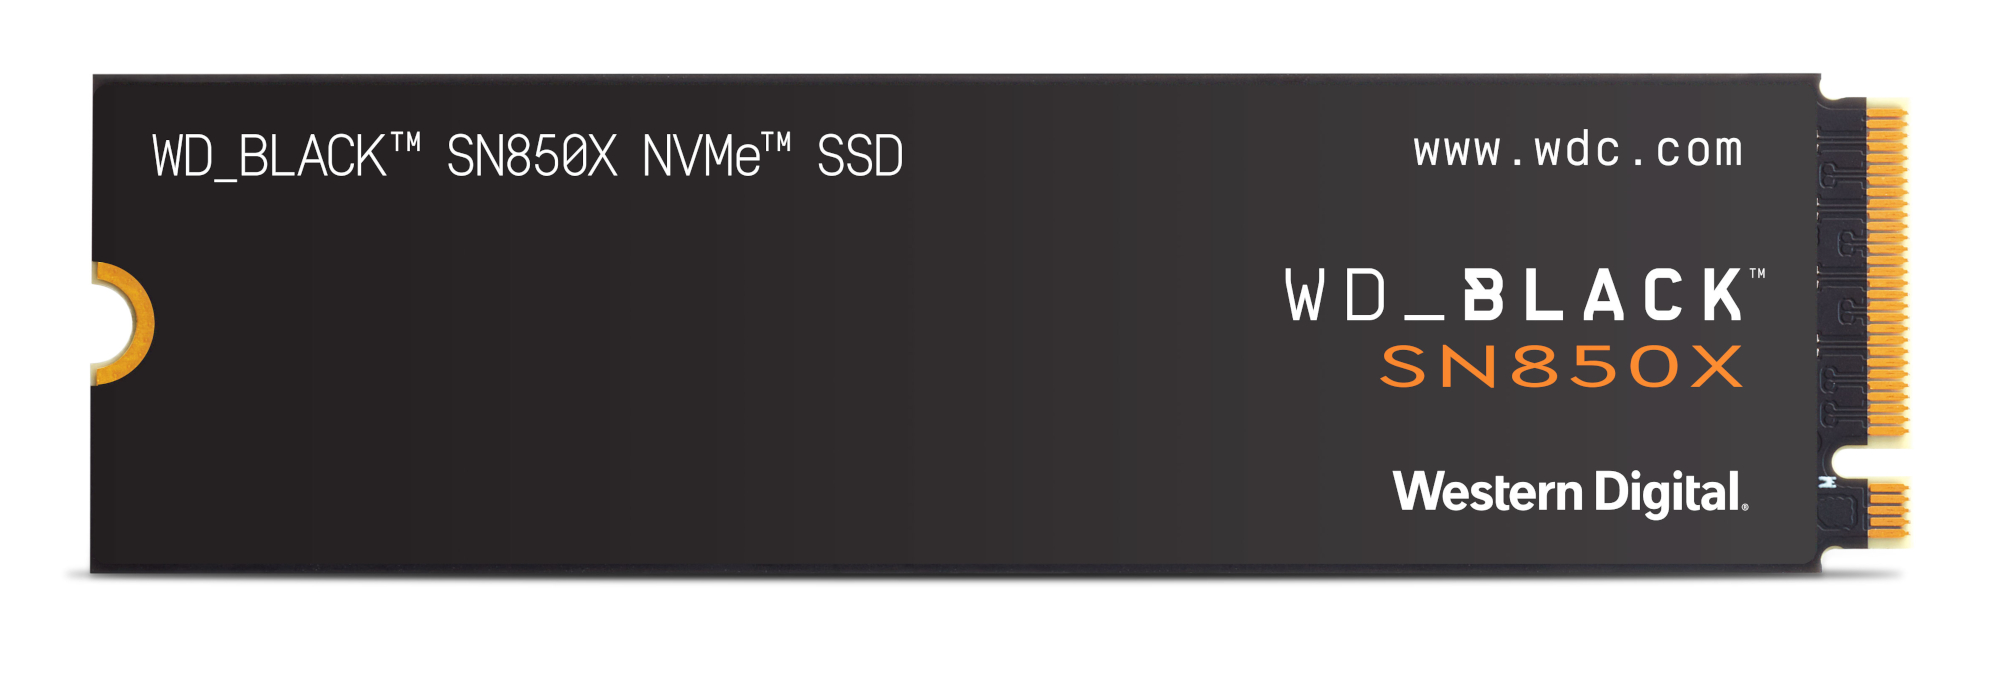 WD Black SN850X - Bester PCIe 4.0 SSD